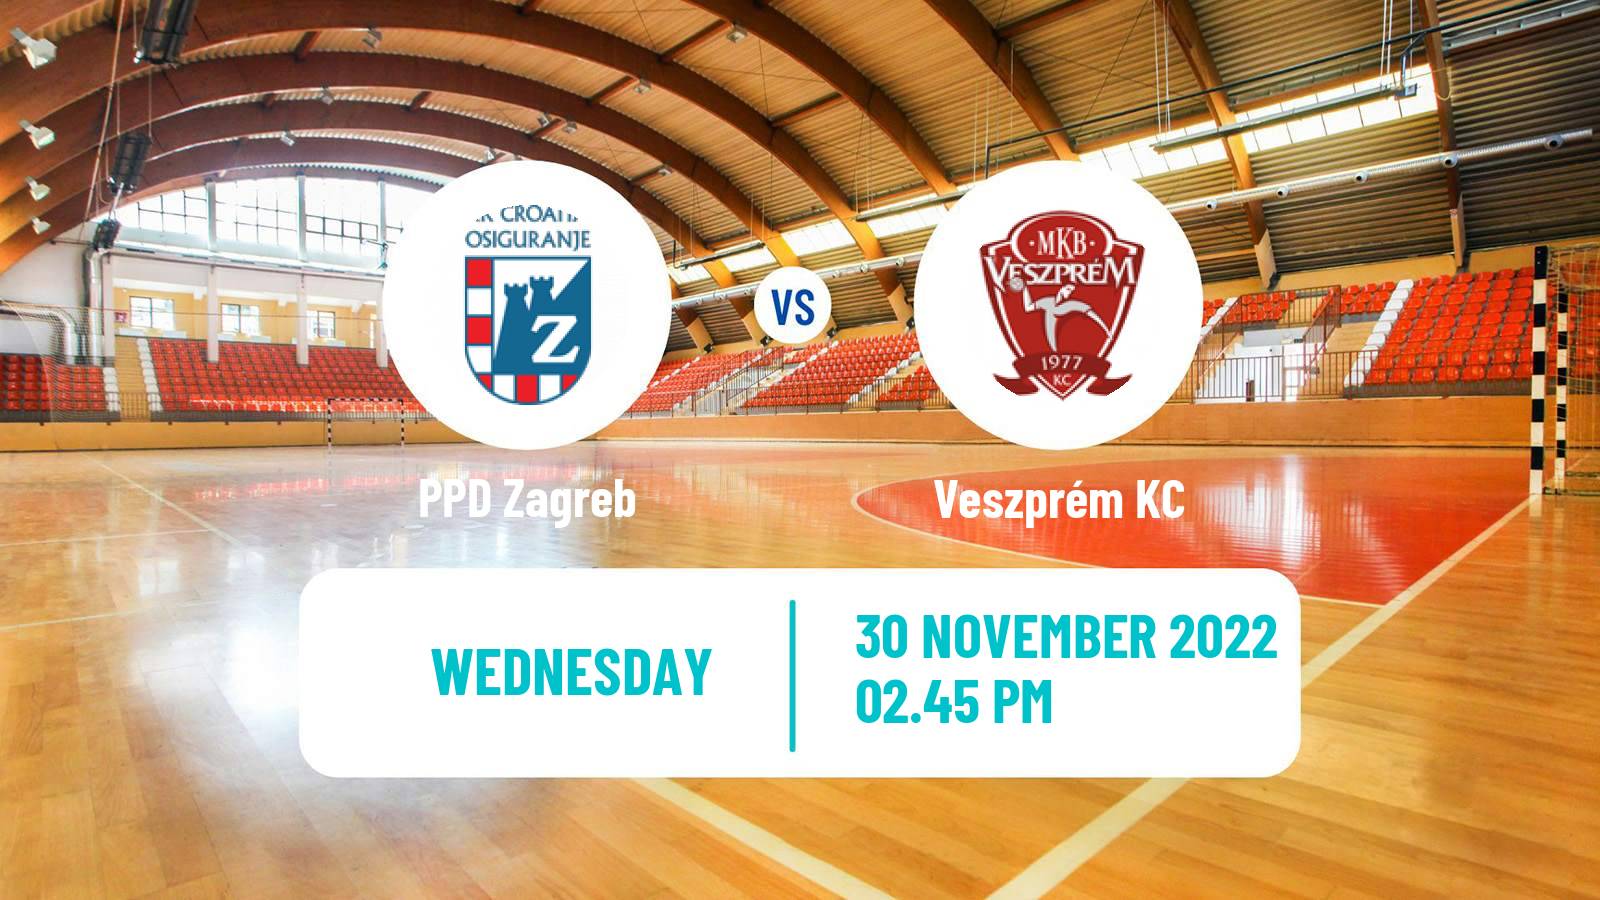 Handball EHF Champions League PPD Zagreb - Veszprém